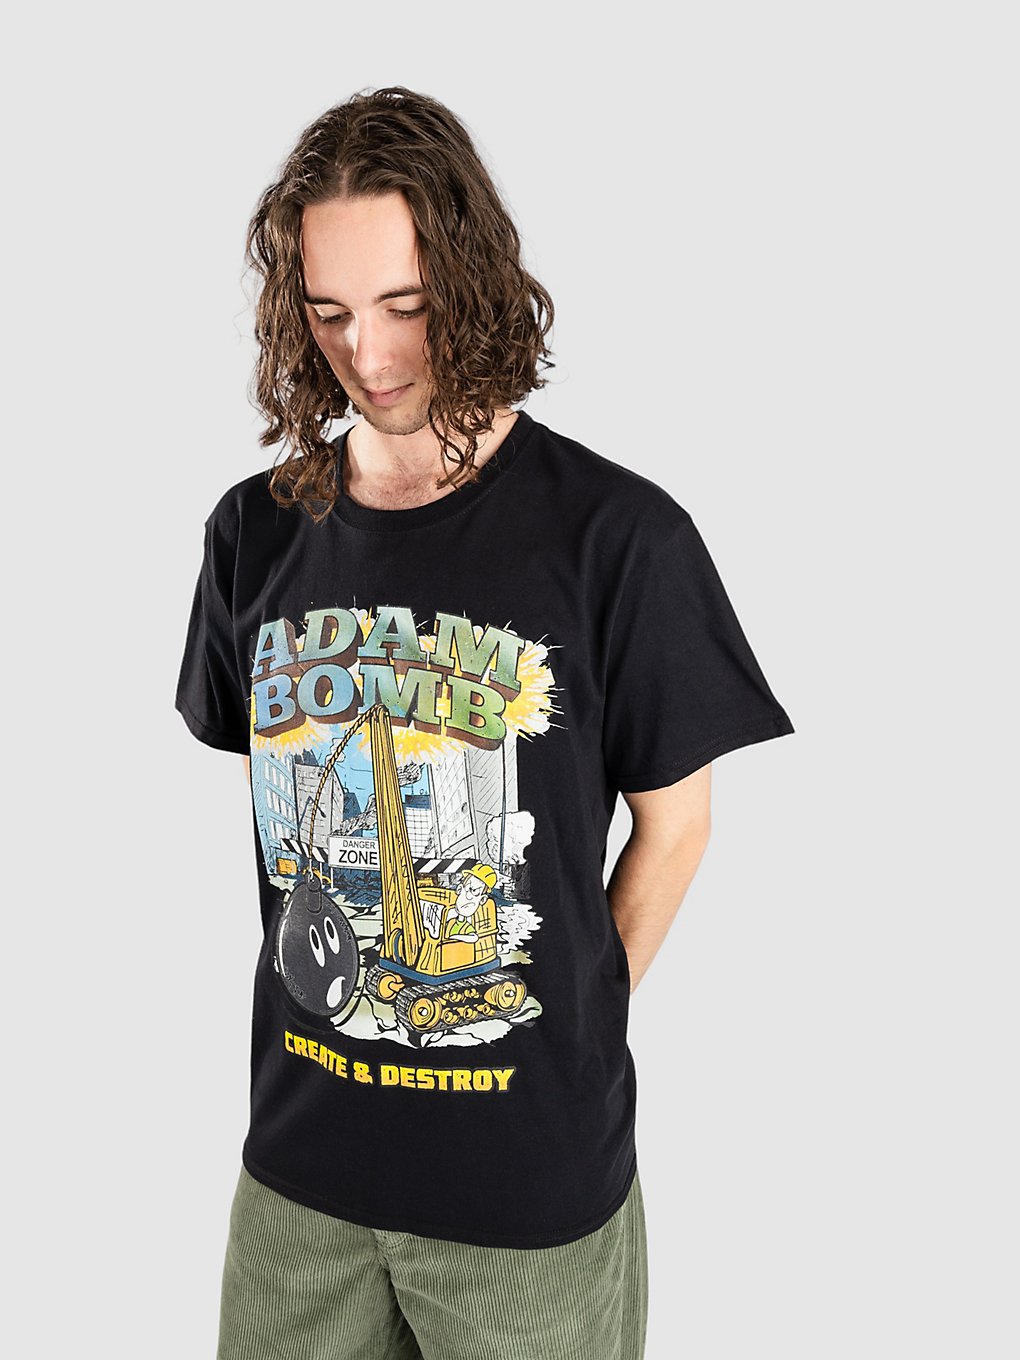 Adam Bomb Create & Destroy T-Shirt black kaufen